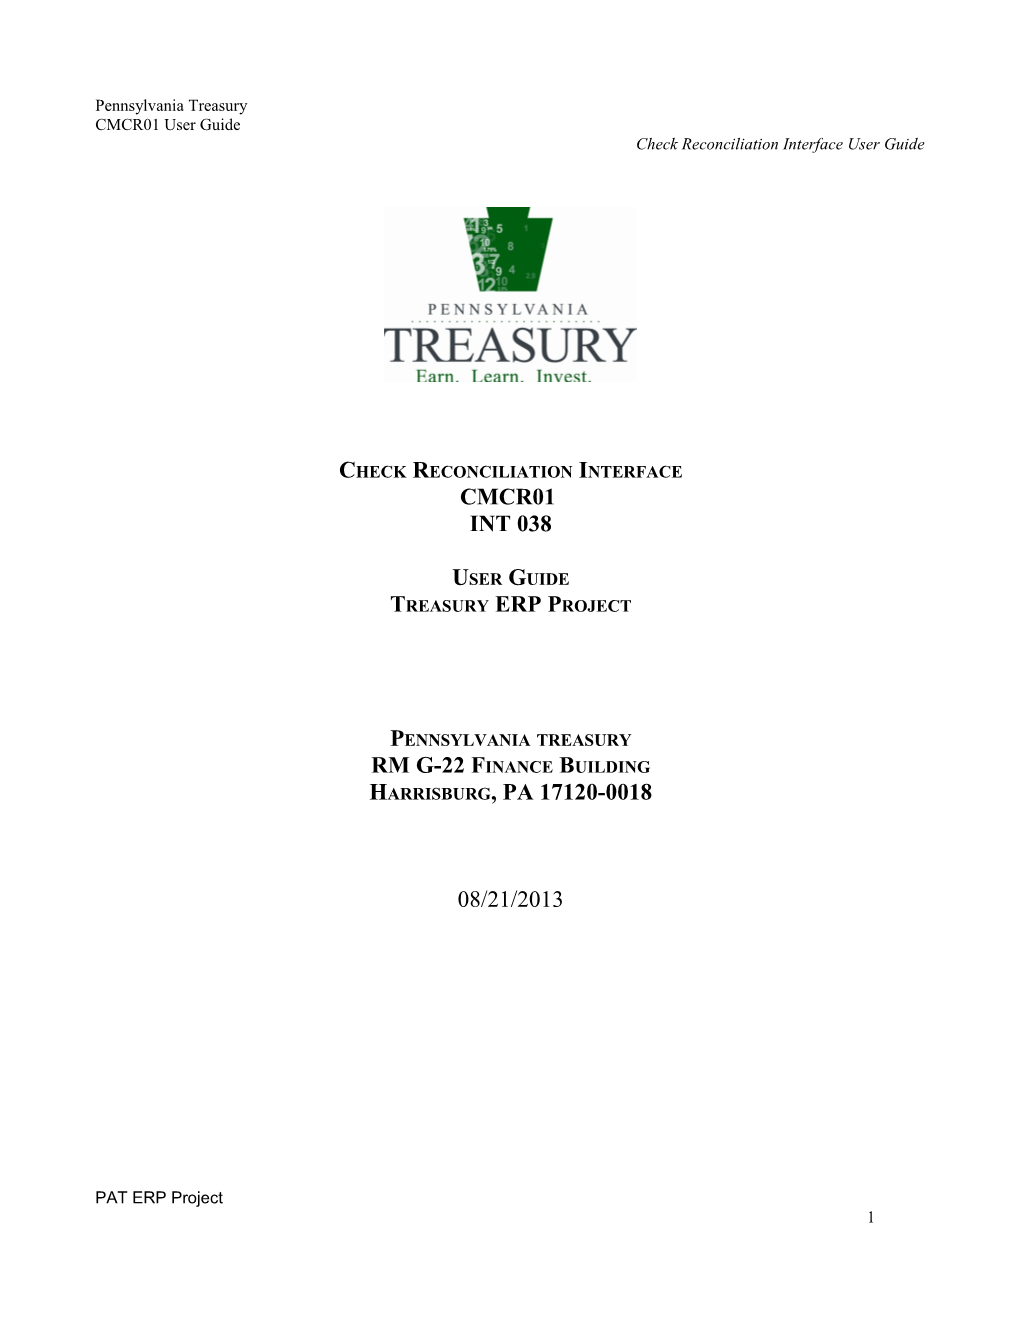 Pennsylvania Treasury CMCR01 User Guide